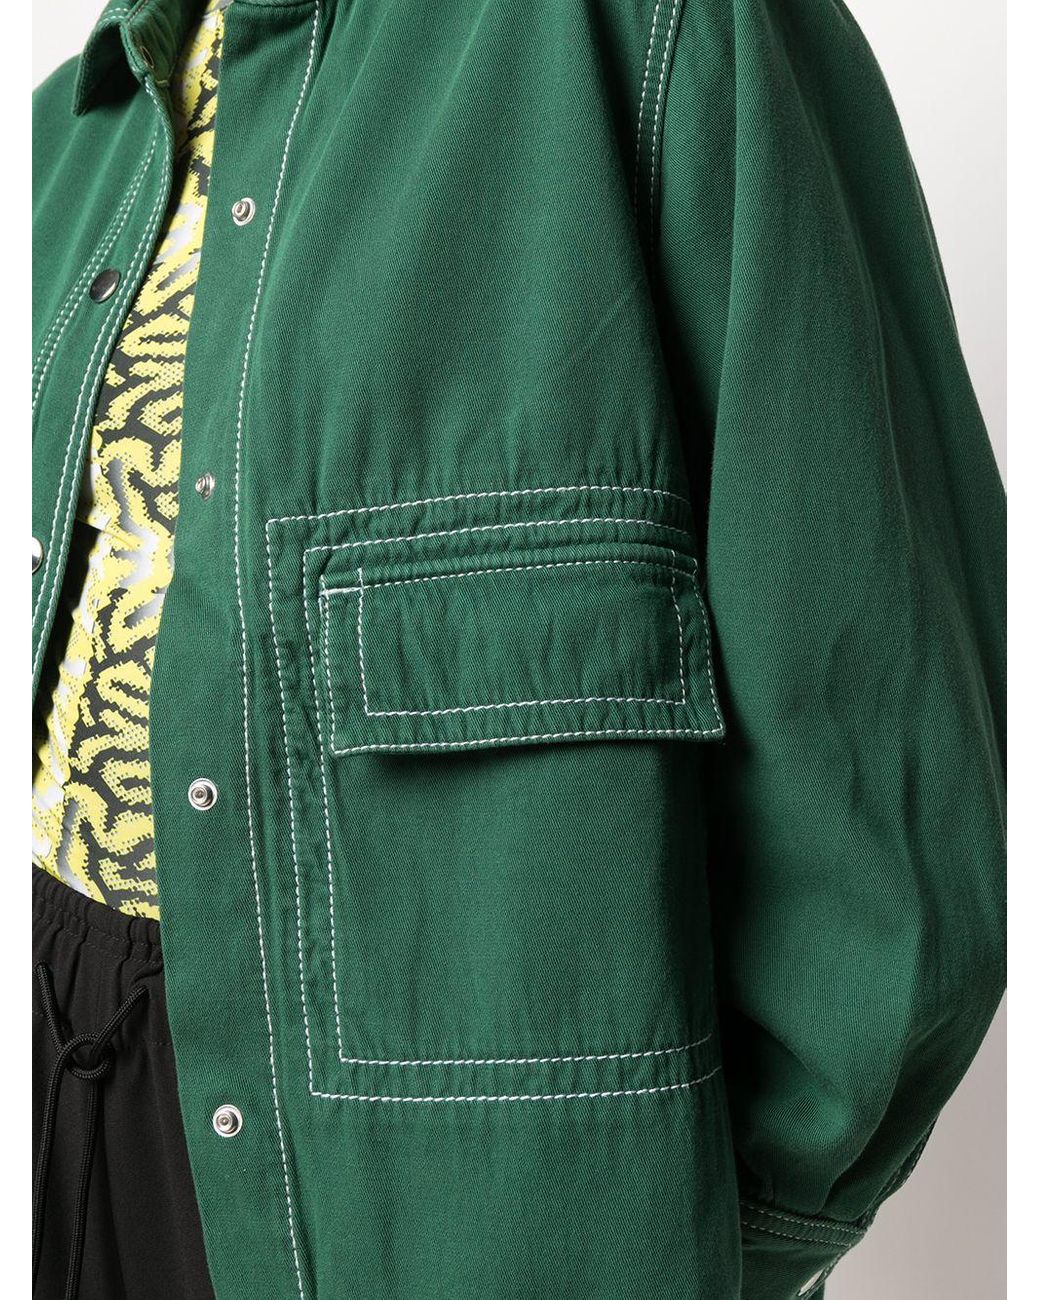 KENZO Contrast Stitch Shirt Jacket in Green | Lyst